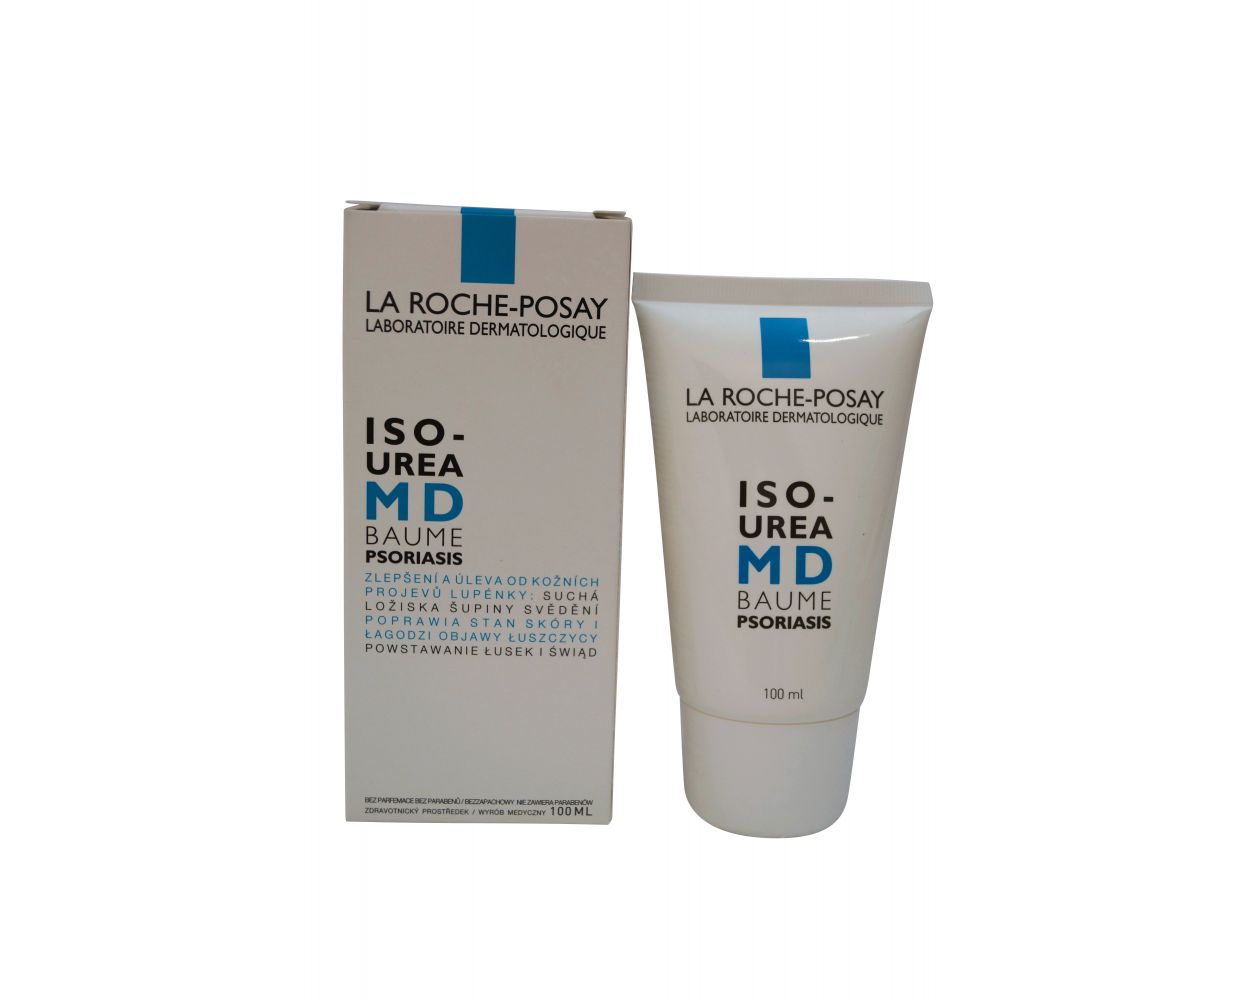 La Roche-Posay Baume Psoriasis | Skincare Beautyvice.com